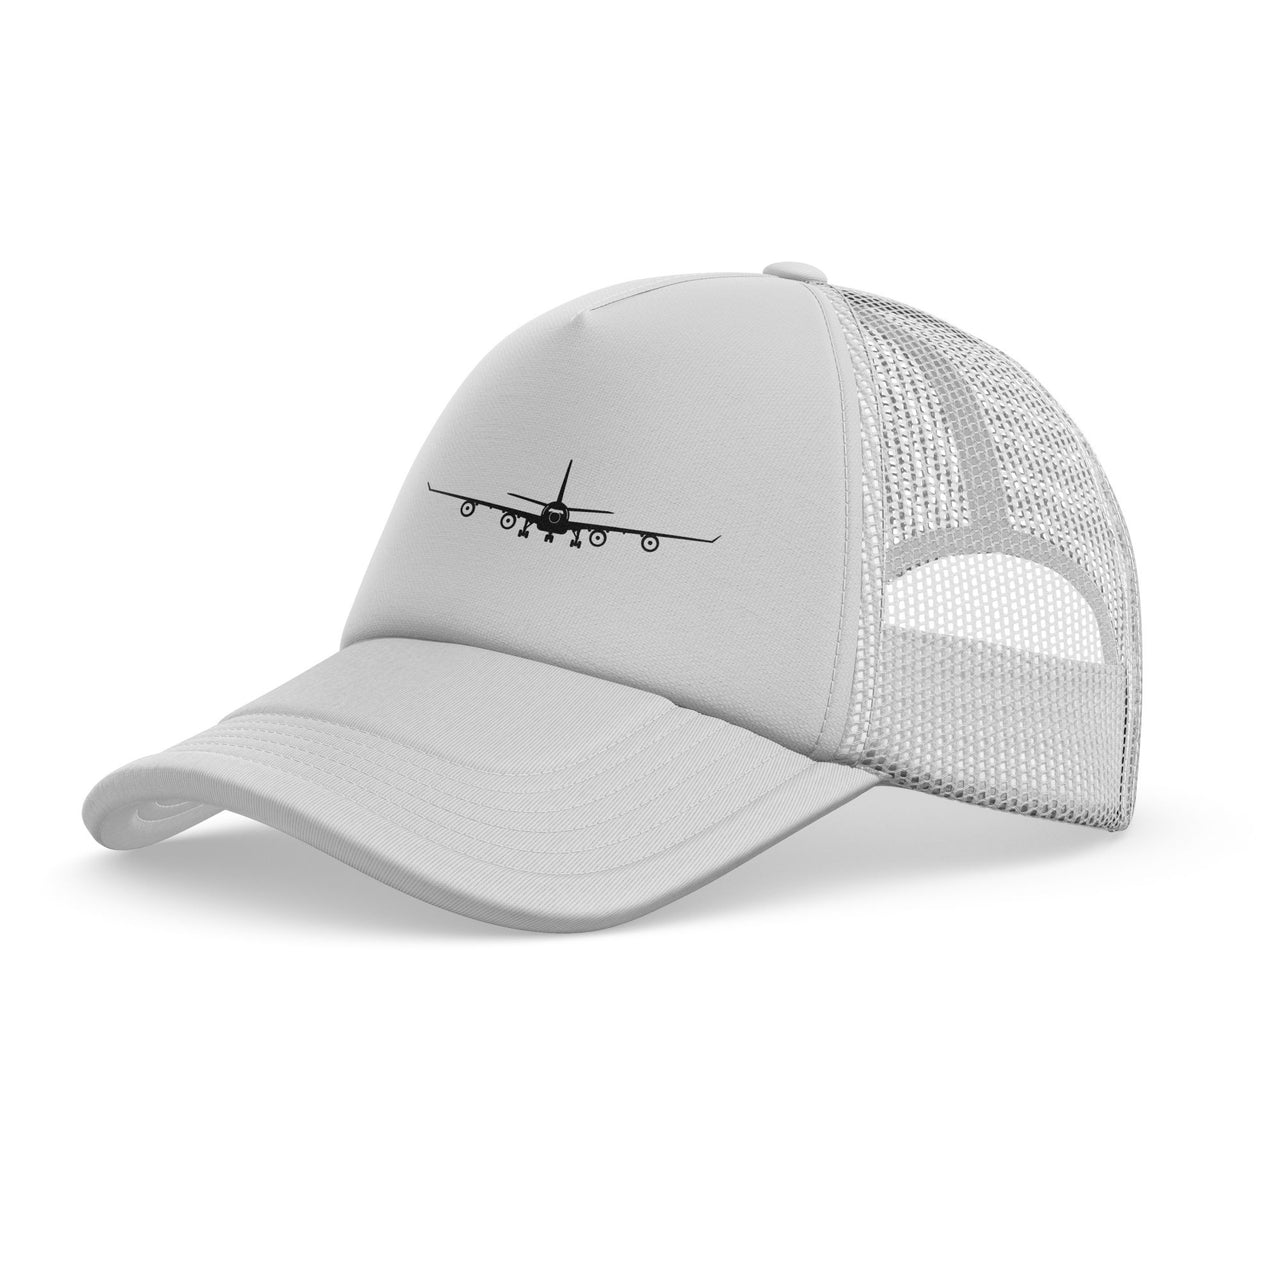 Airbus A340 Silhouette Designed Trucker Caps & Hats